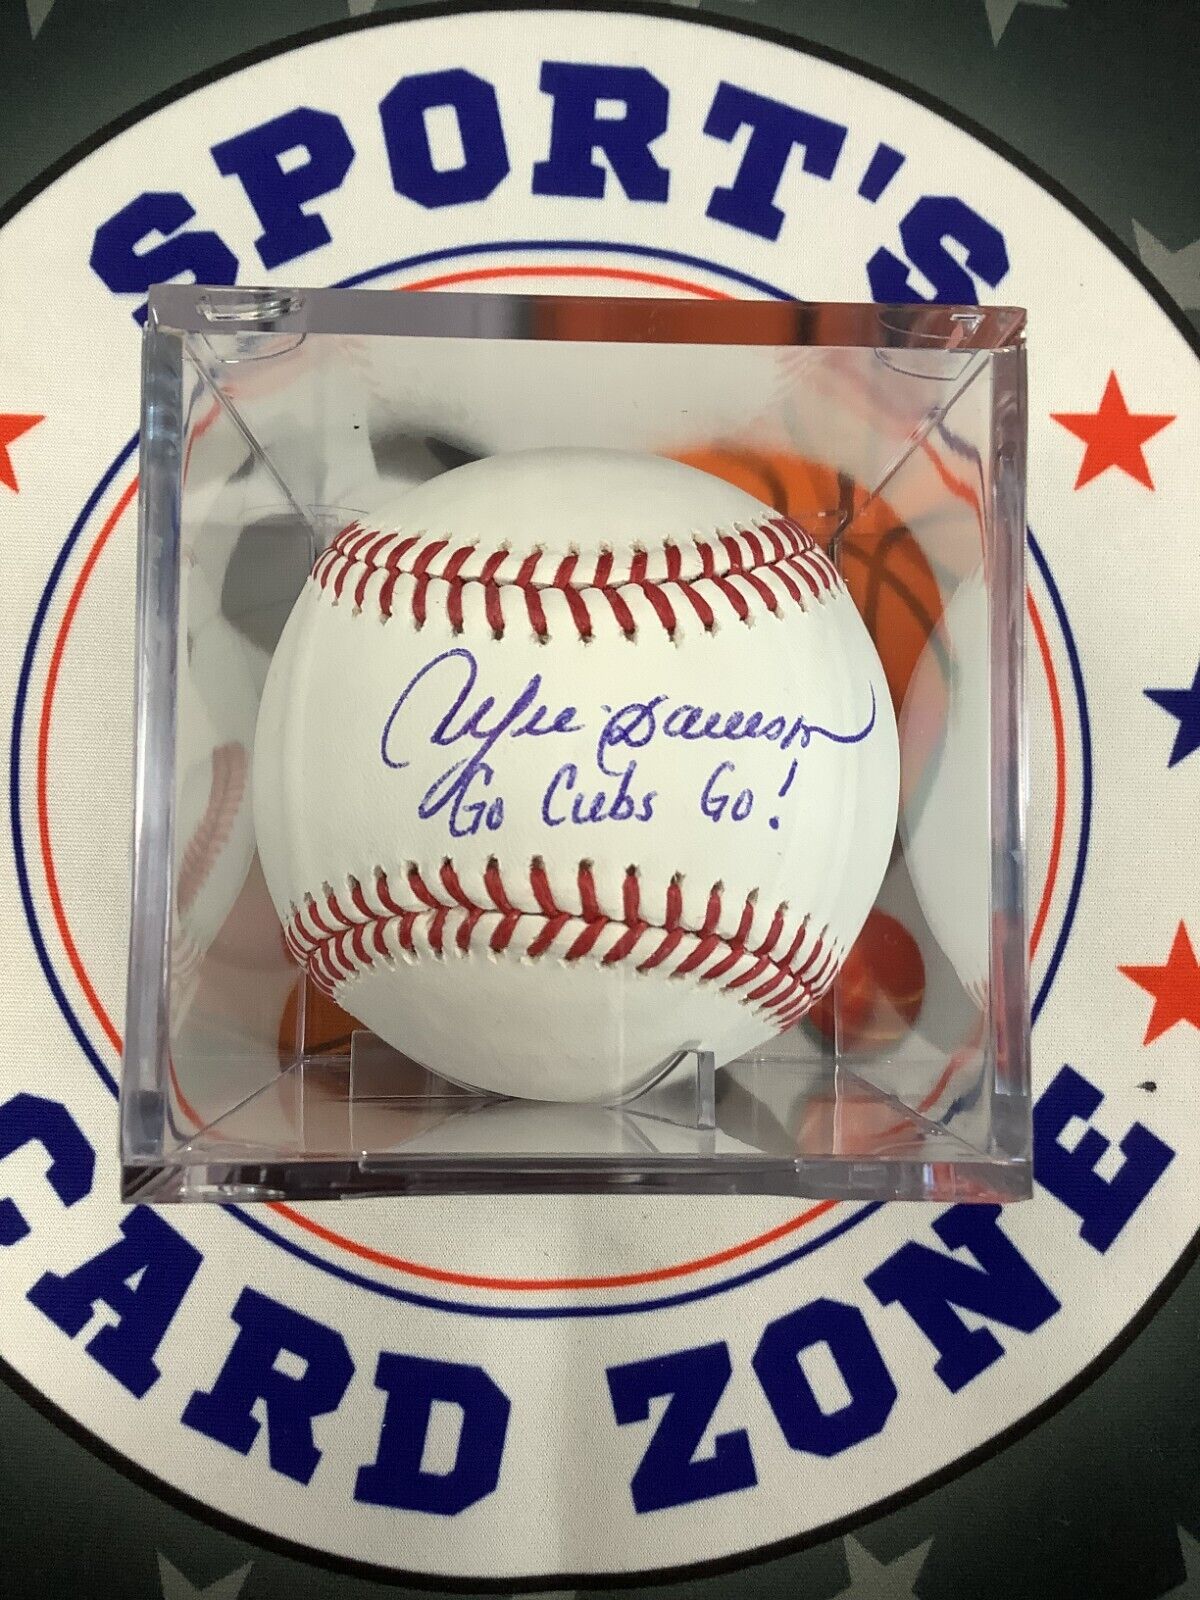 Andre Dawson Autographed Baseball Go Cubs Go! Inscription JSA COA